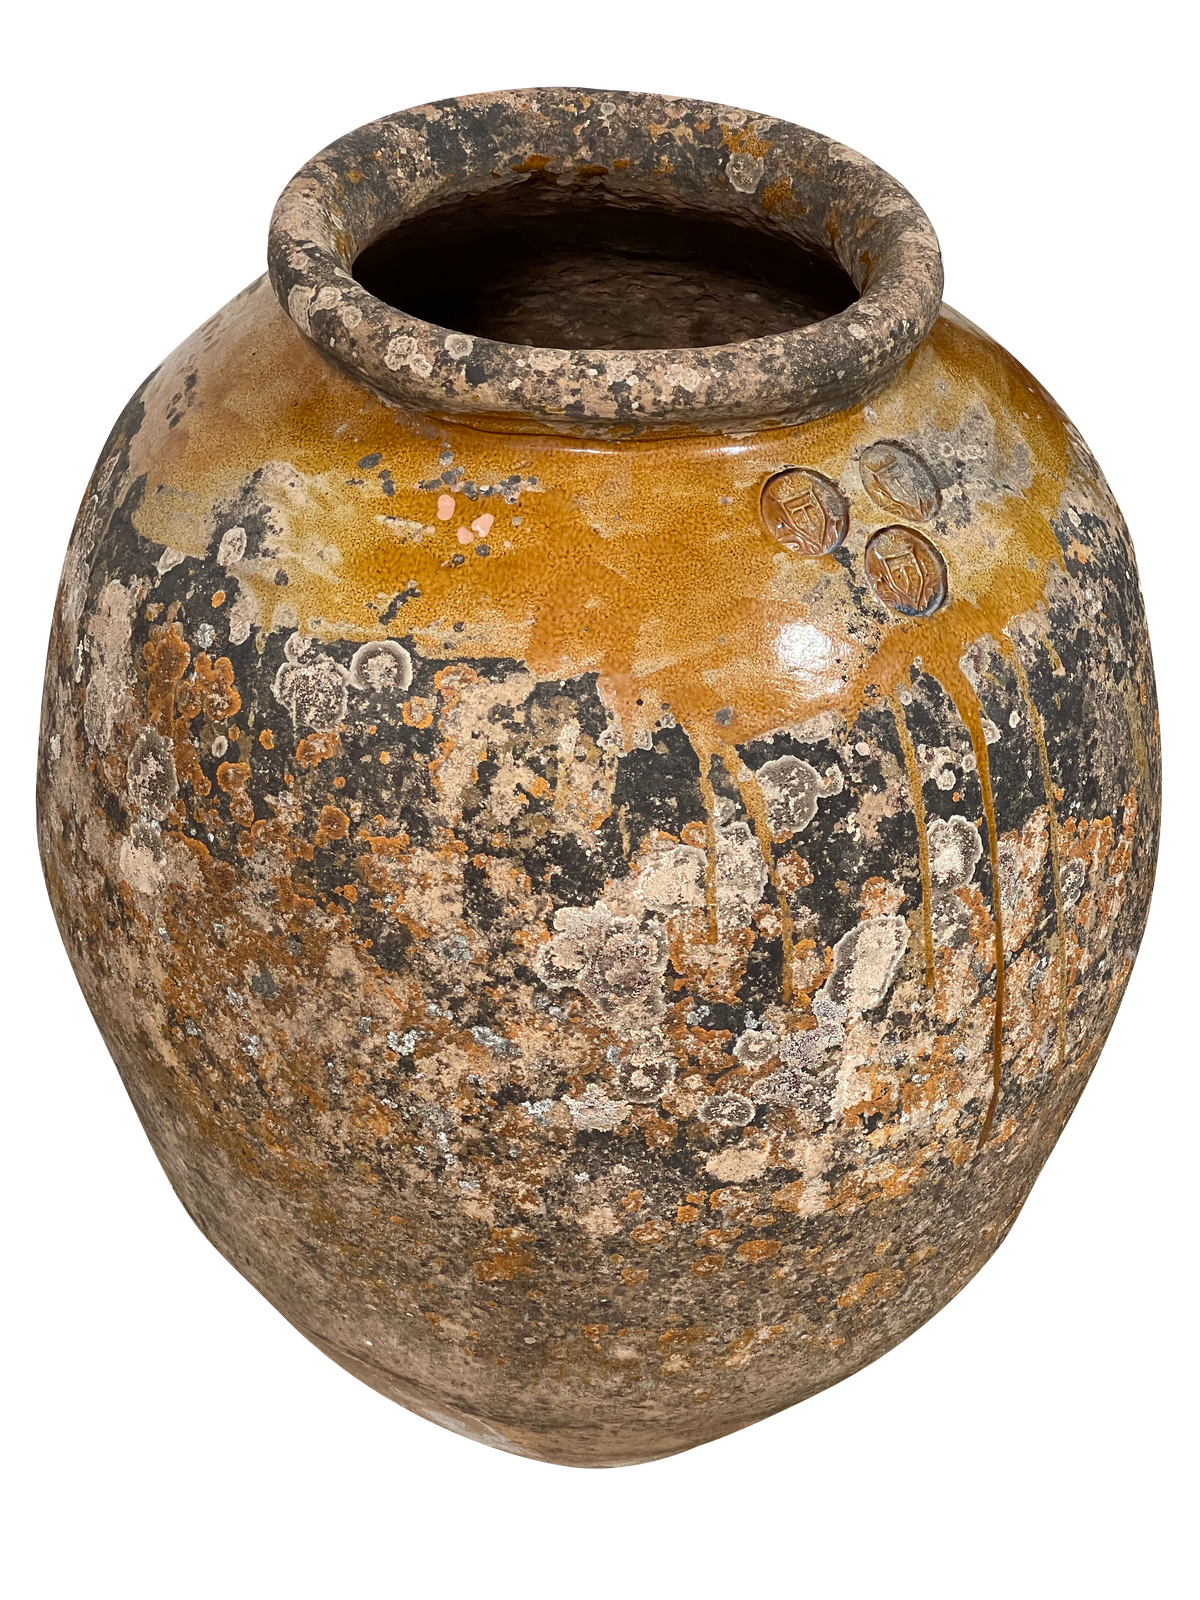 16th Century Exceptional Large Biot Oil Vessel Jar